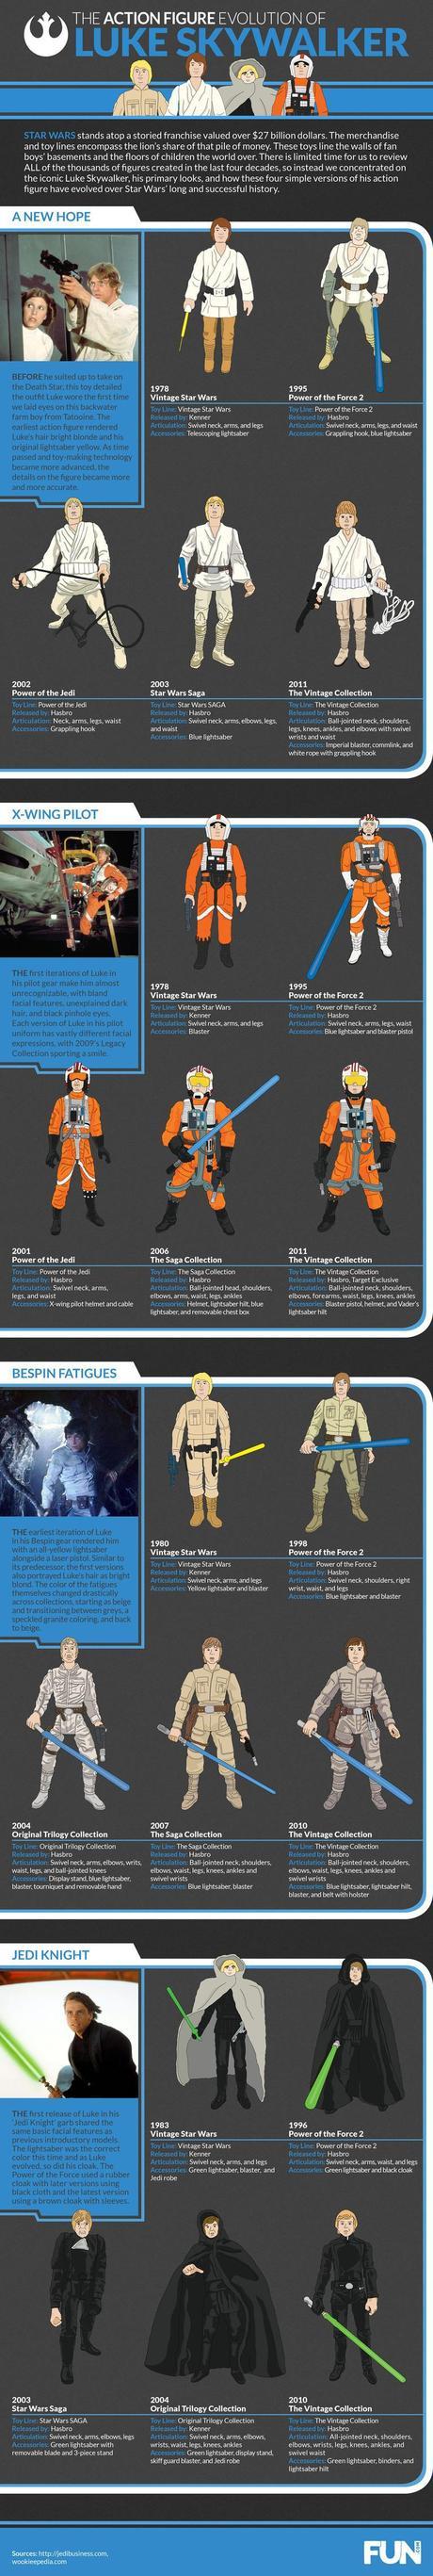 Luke Skywalker Action Figures Infographic